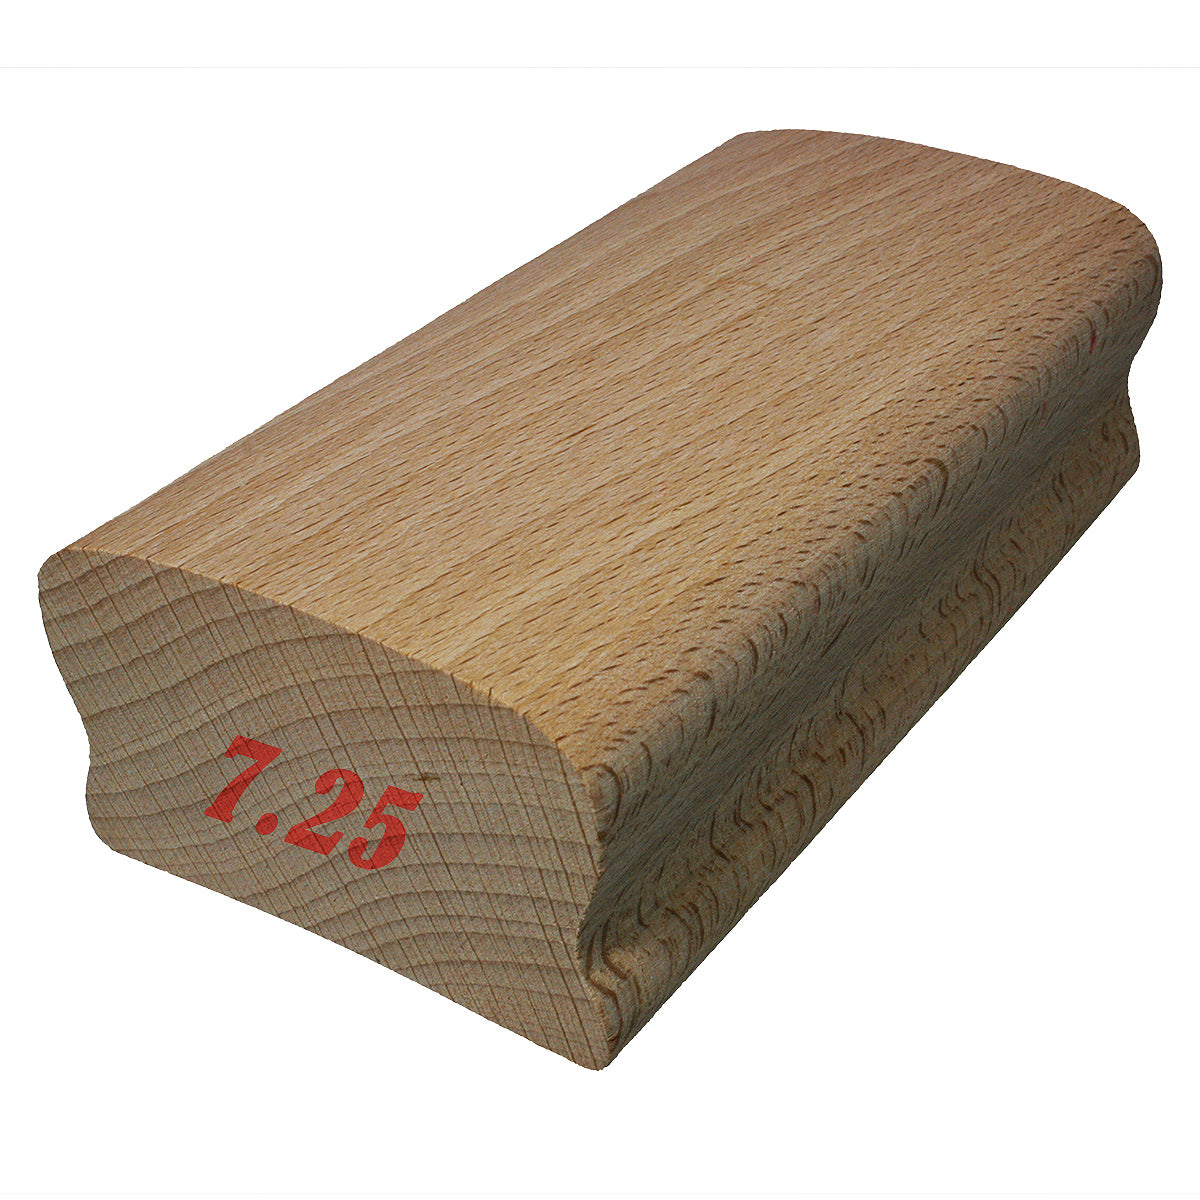 LT-4870-000 Radius Sanding Block tool for Fret Leveling Fingerboard Inlay, 7 1/4"